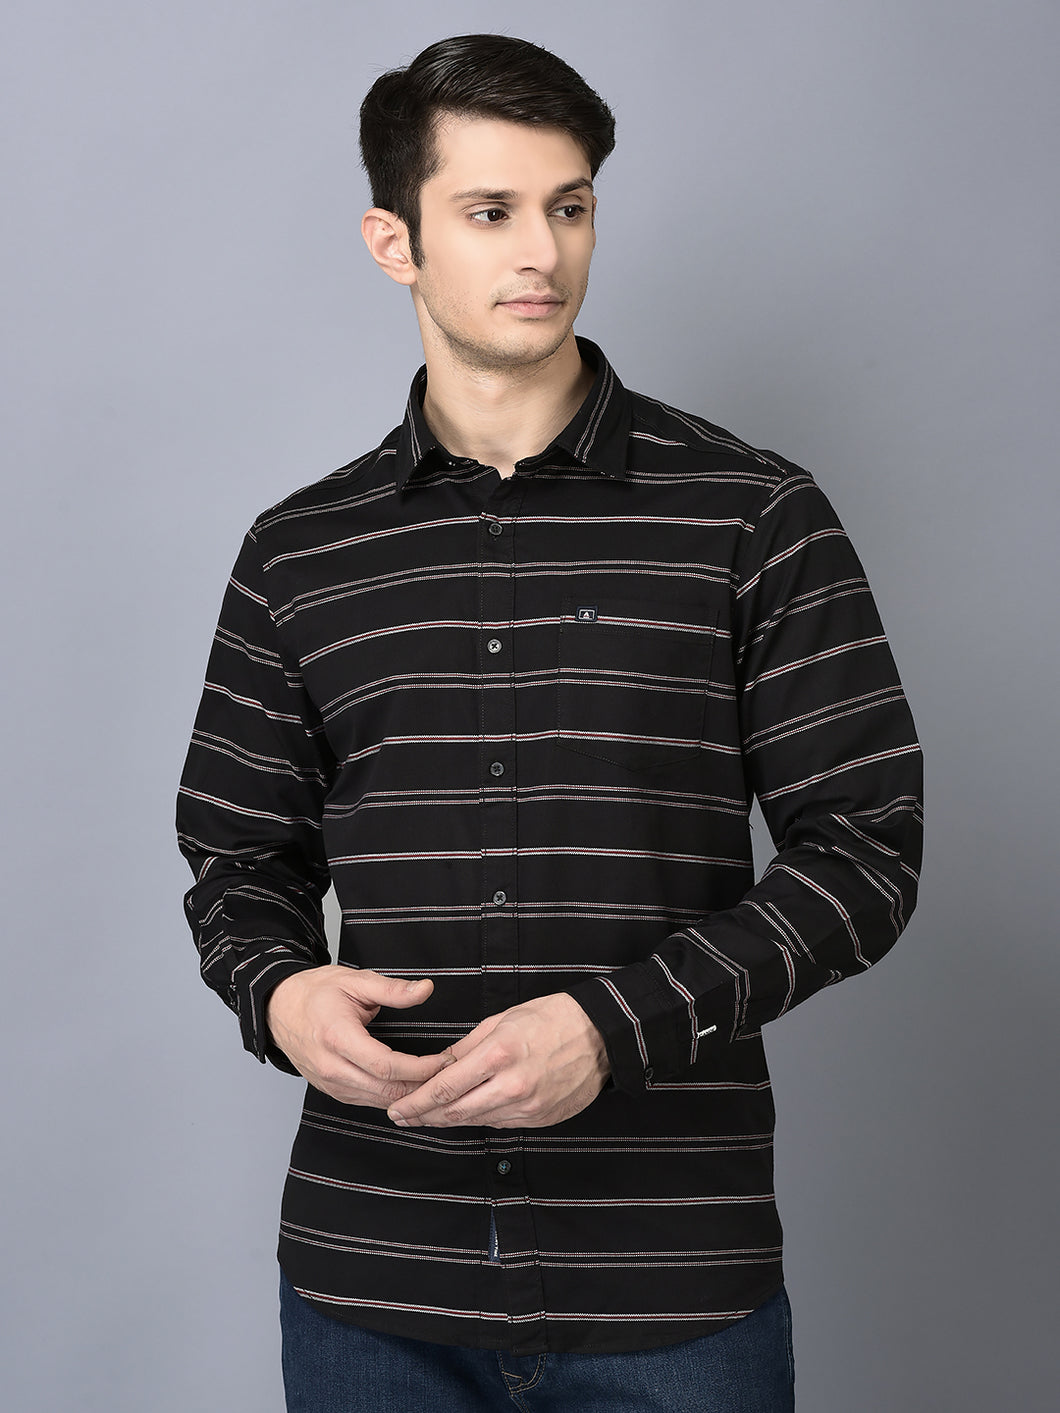 CANOE MEN Casual Shirt Black Color Cotton Fabric Button Closure Striped